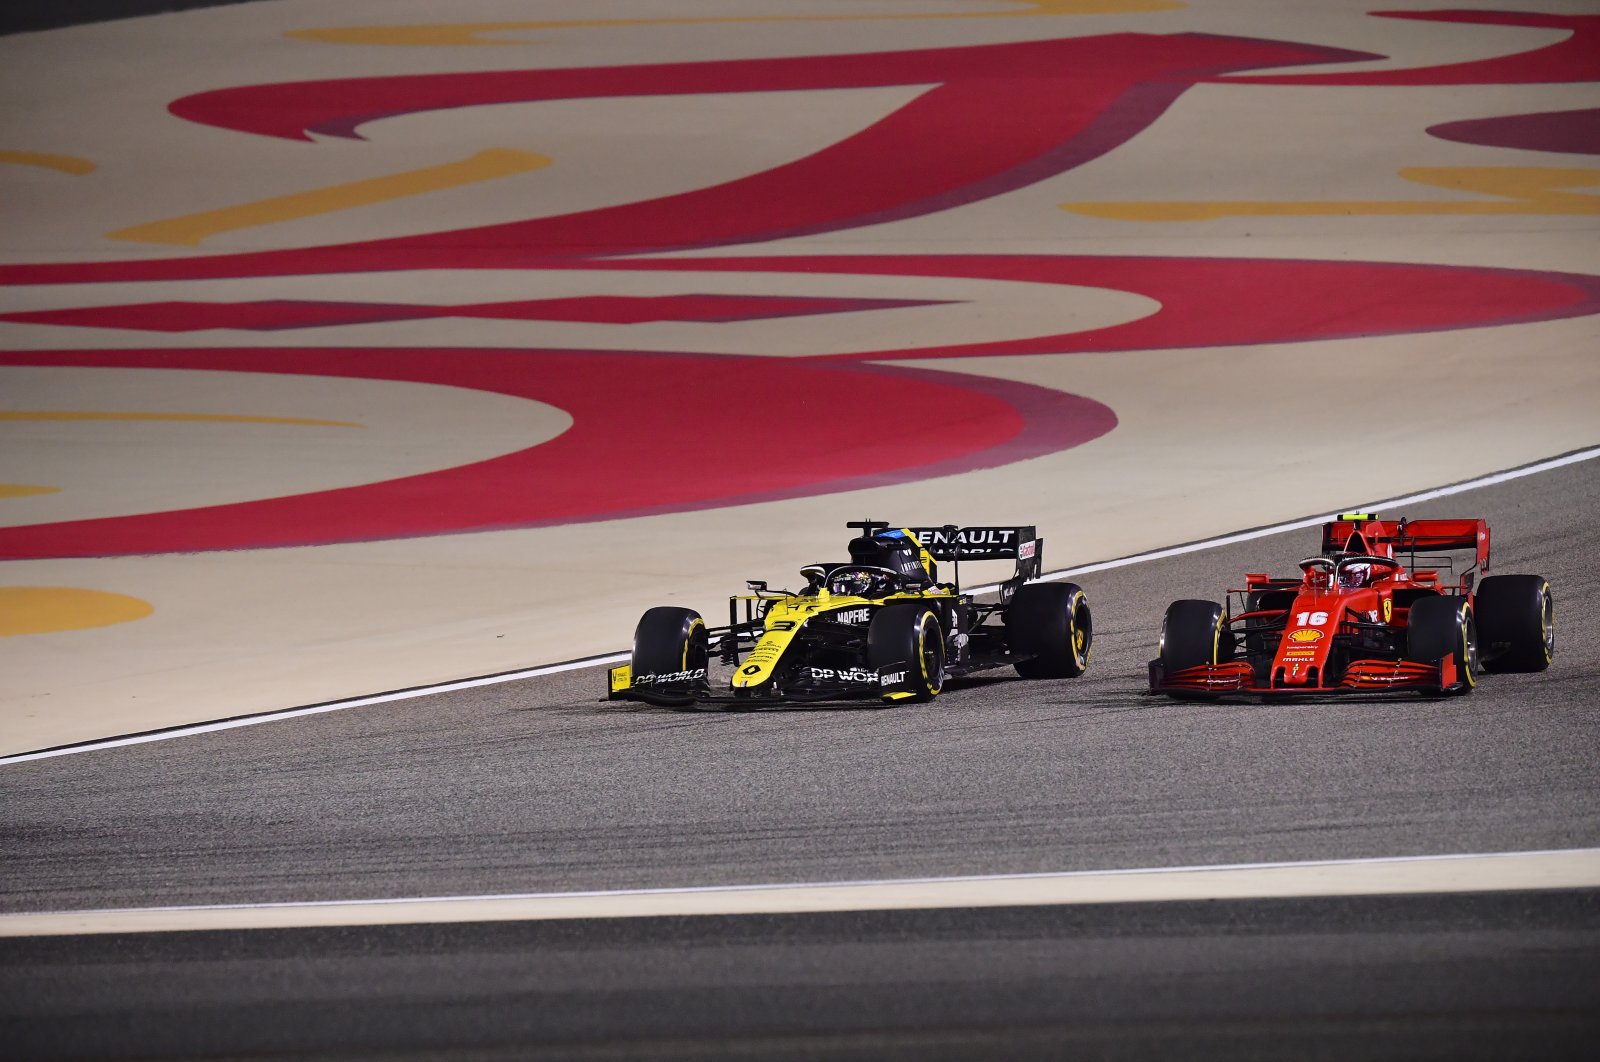 Daniel Ricciardo of Australia (L) and Charles Leclerc of Monaco in action during the Formula One Bahrain Grand Prix in Sakhir, Bahrain, Nov. 29, 2020. (AP Photo)